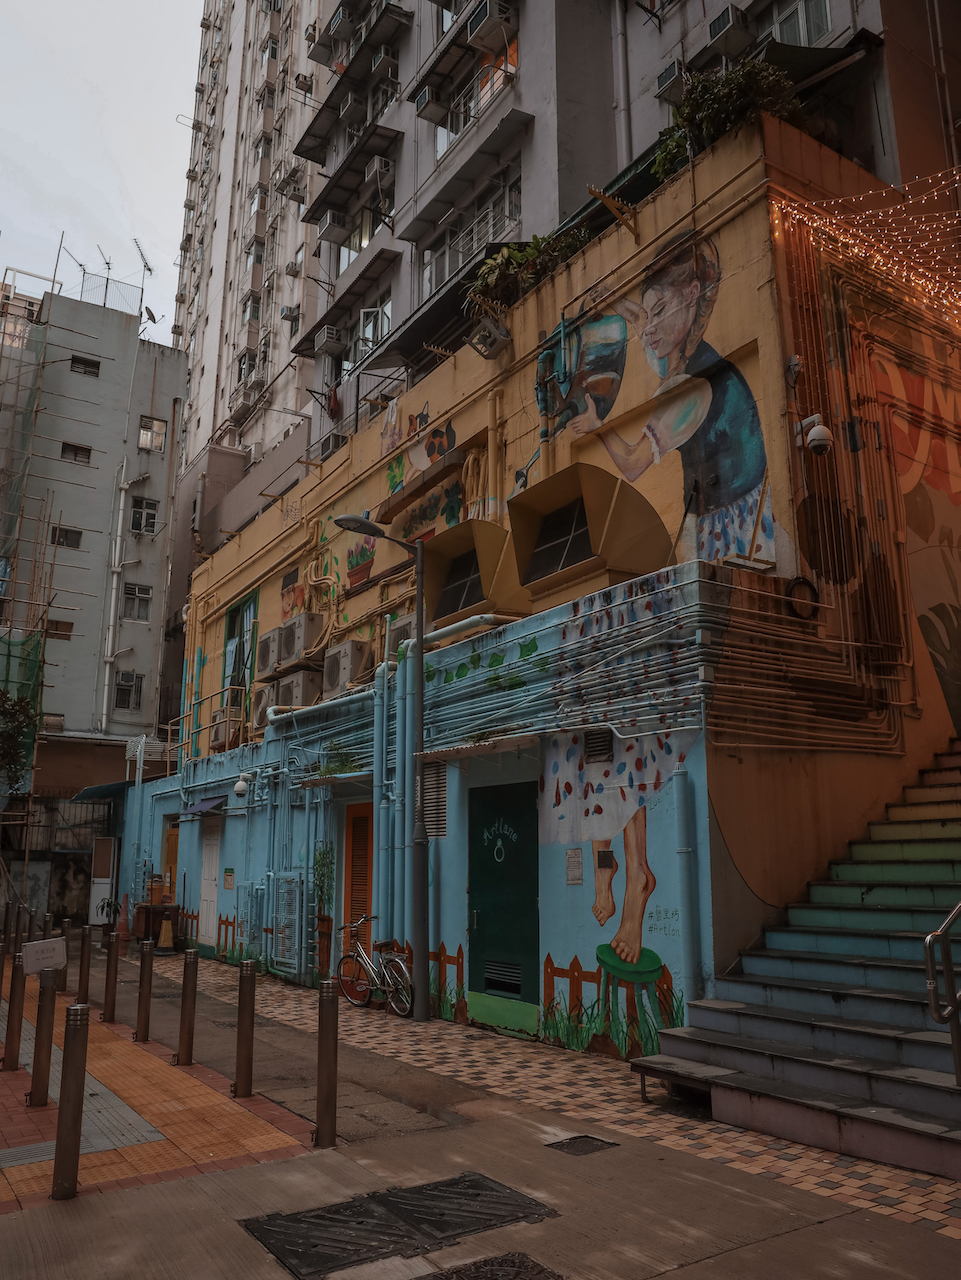 Staircase and graffitis in Art Lane - Hong Kong